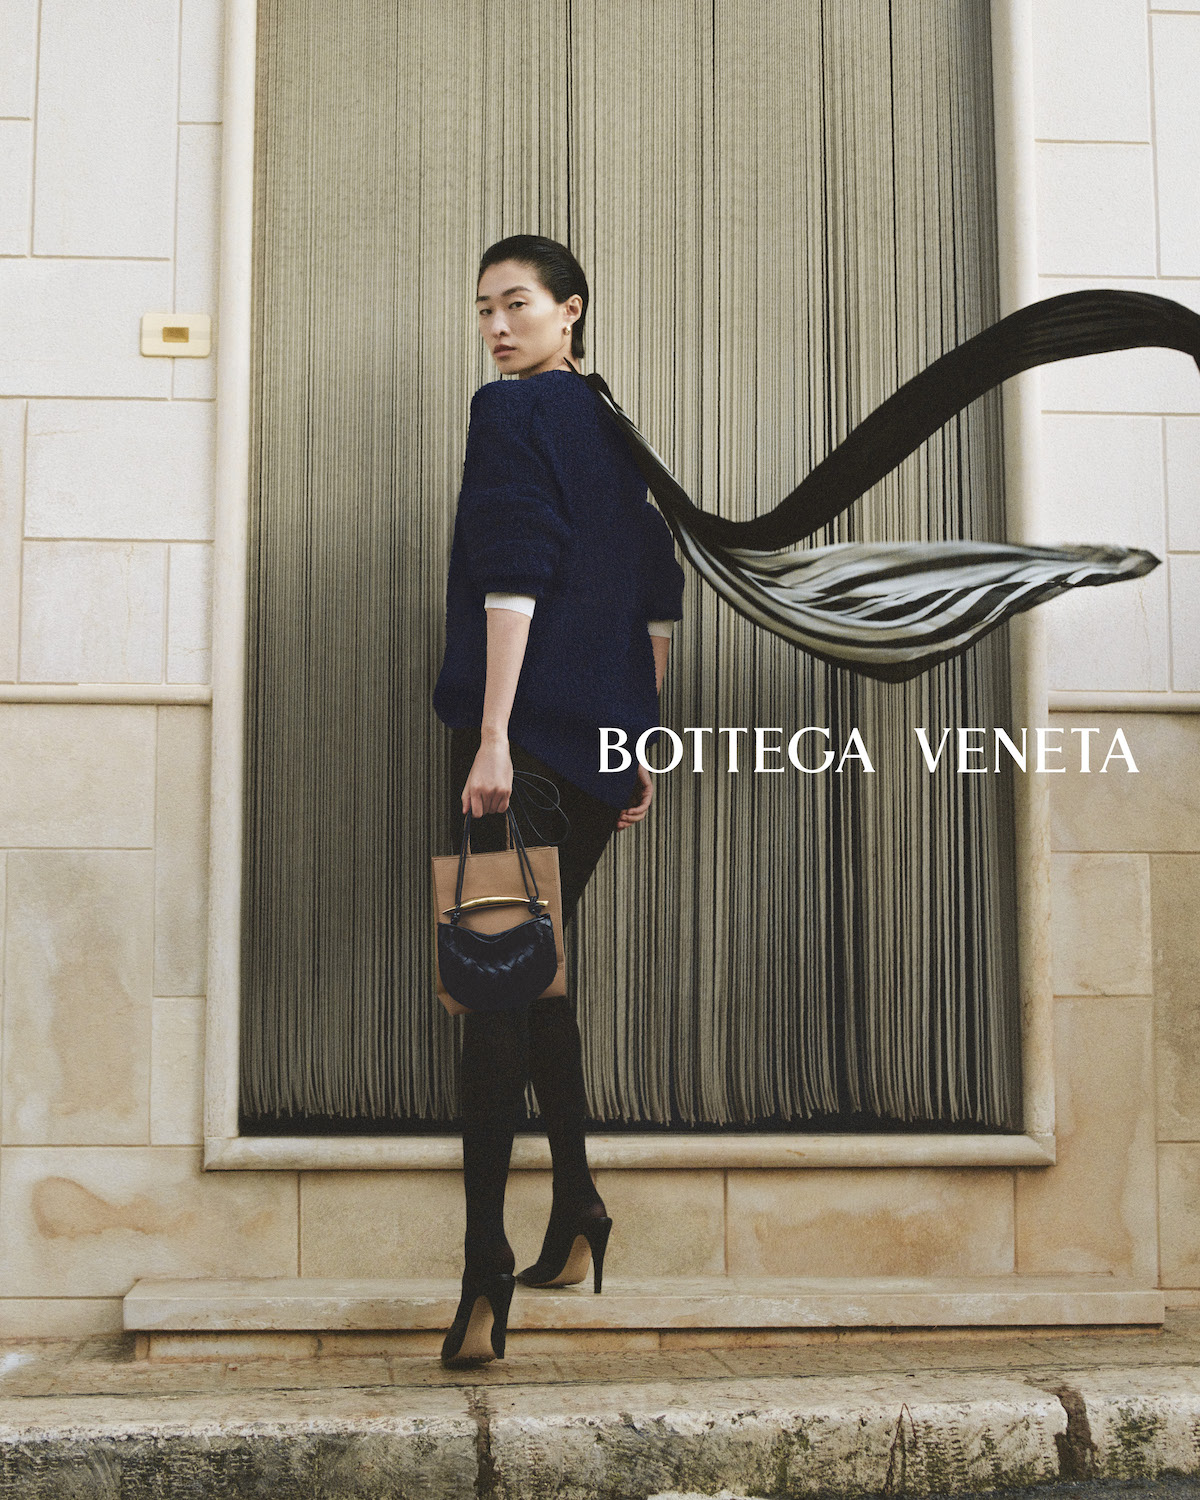 Andiamo: Bottega Veneta Gets Us Going